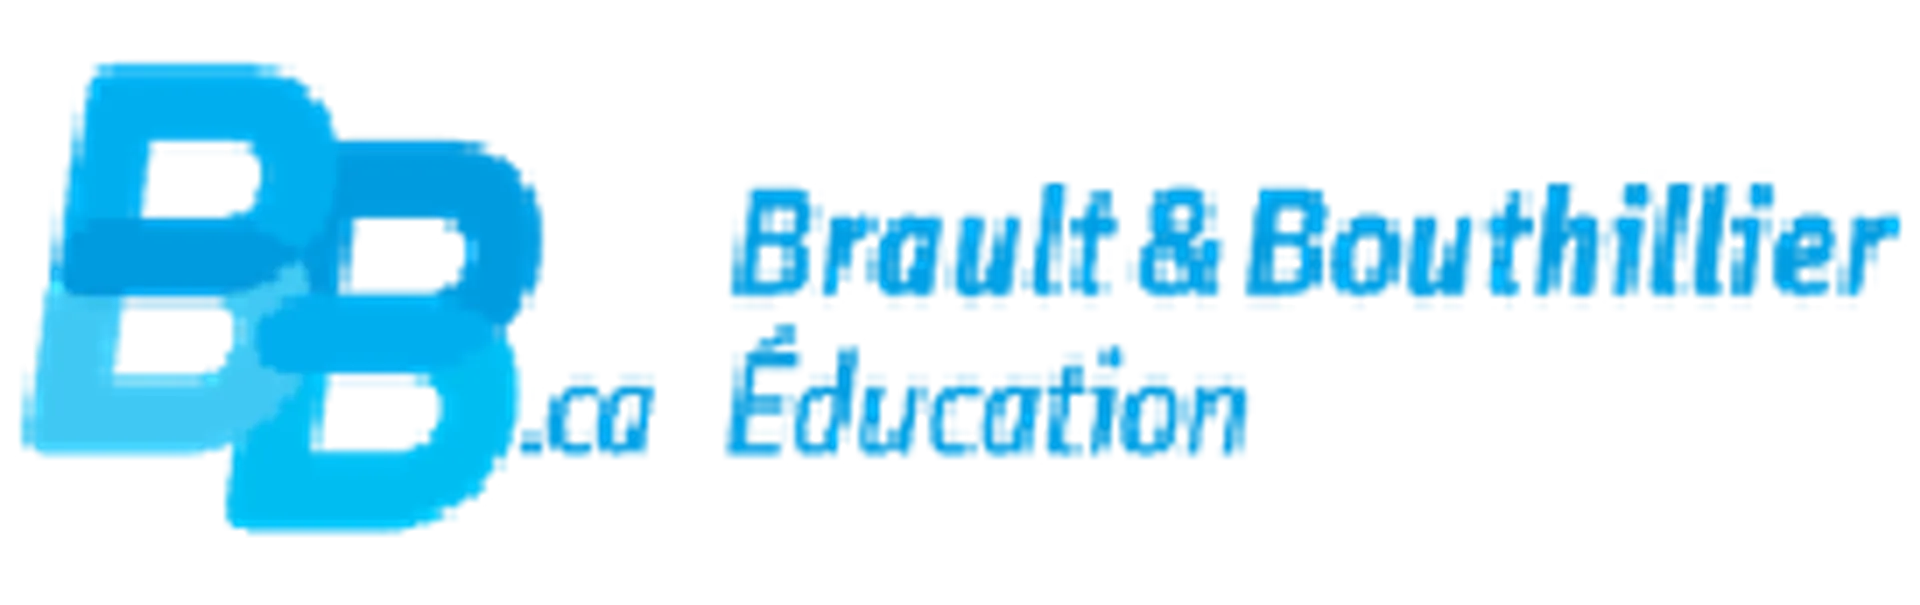 BRAULT & BOUTHILLIER logo de circulaires